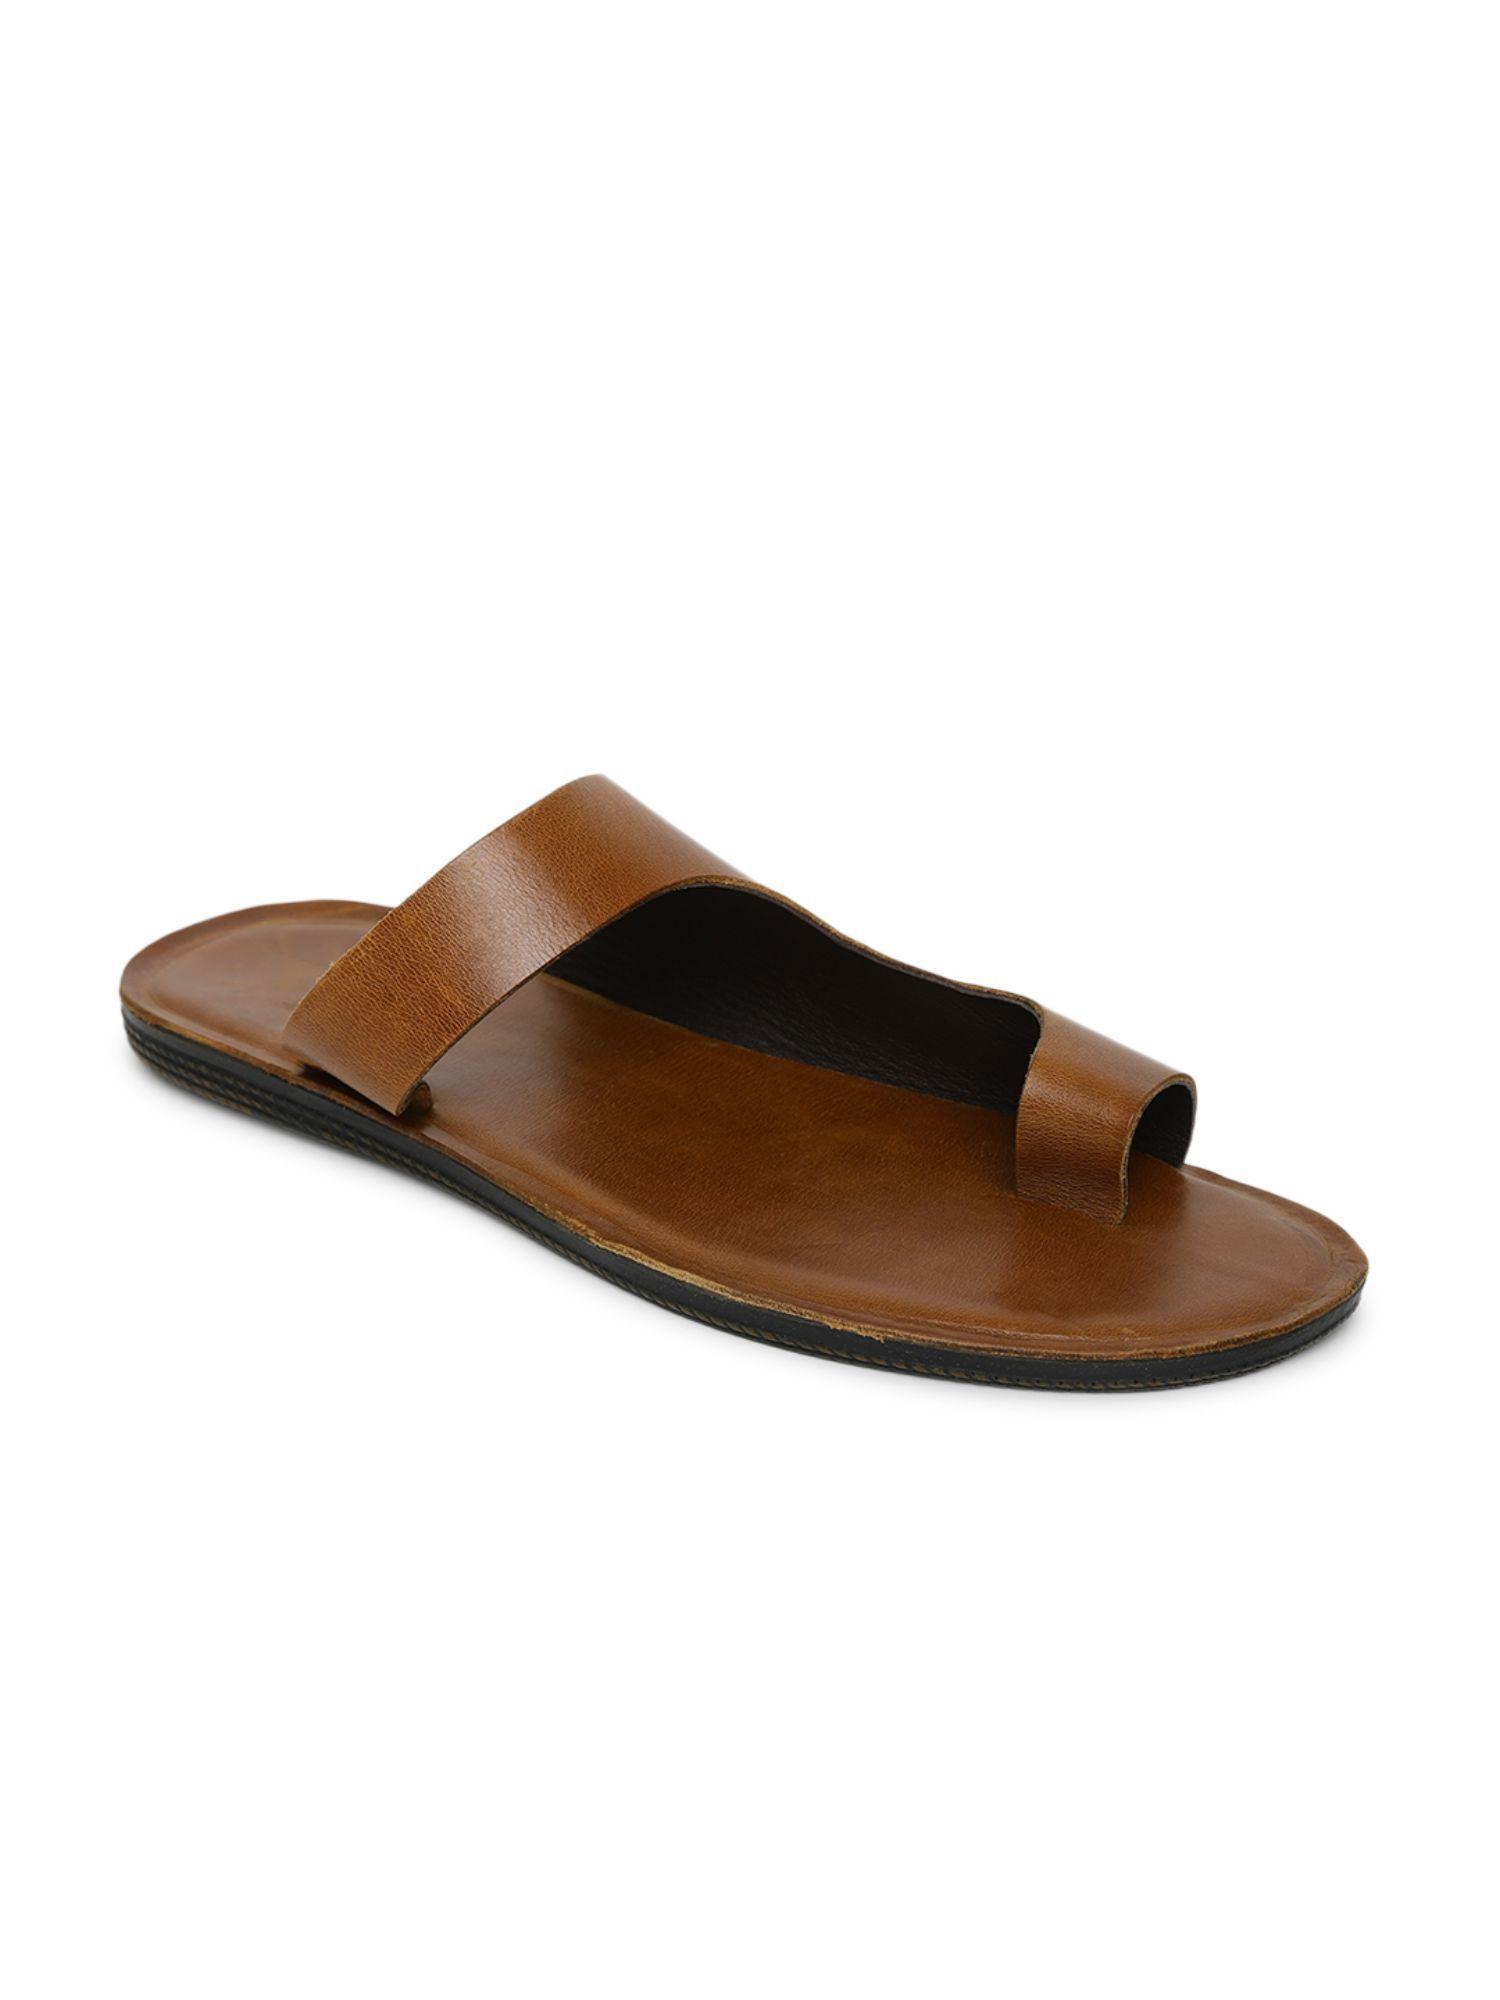 one-toe-brown-leather-plain-flipflops